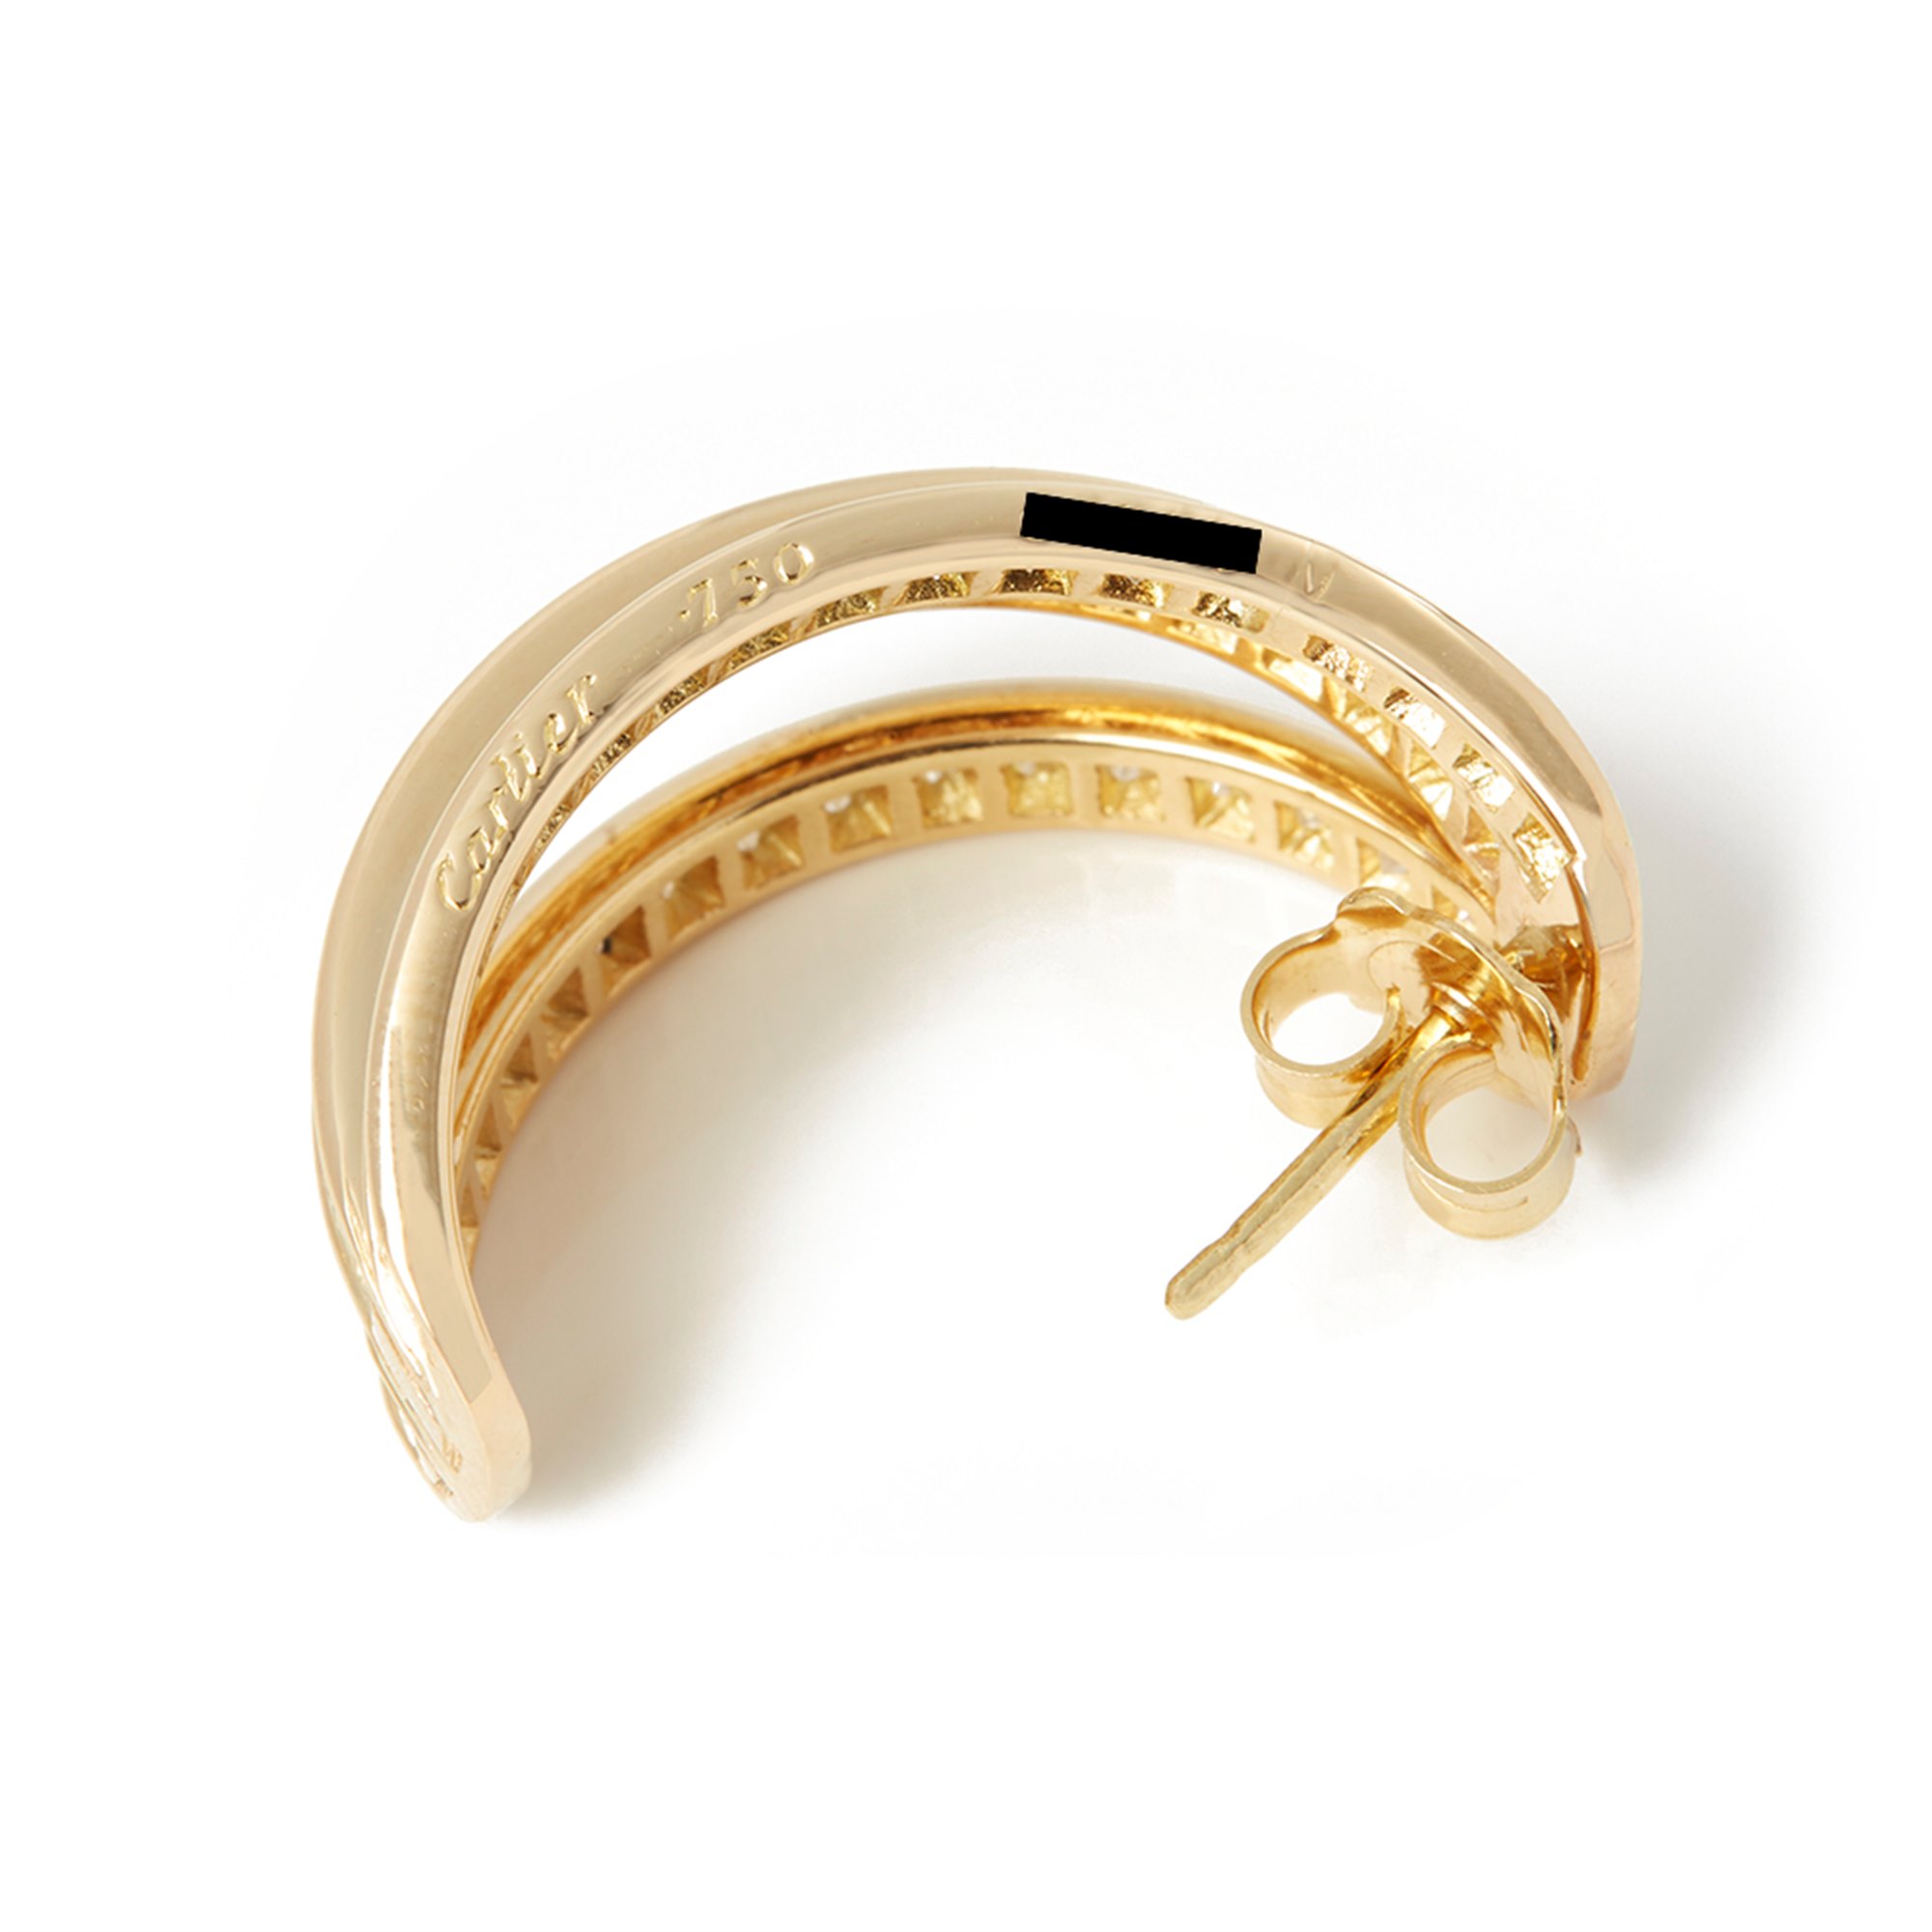 Cartier 18k Yellow Gold Three Row Diamond Earrings